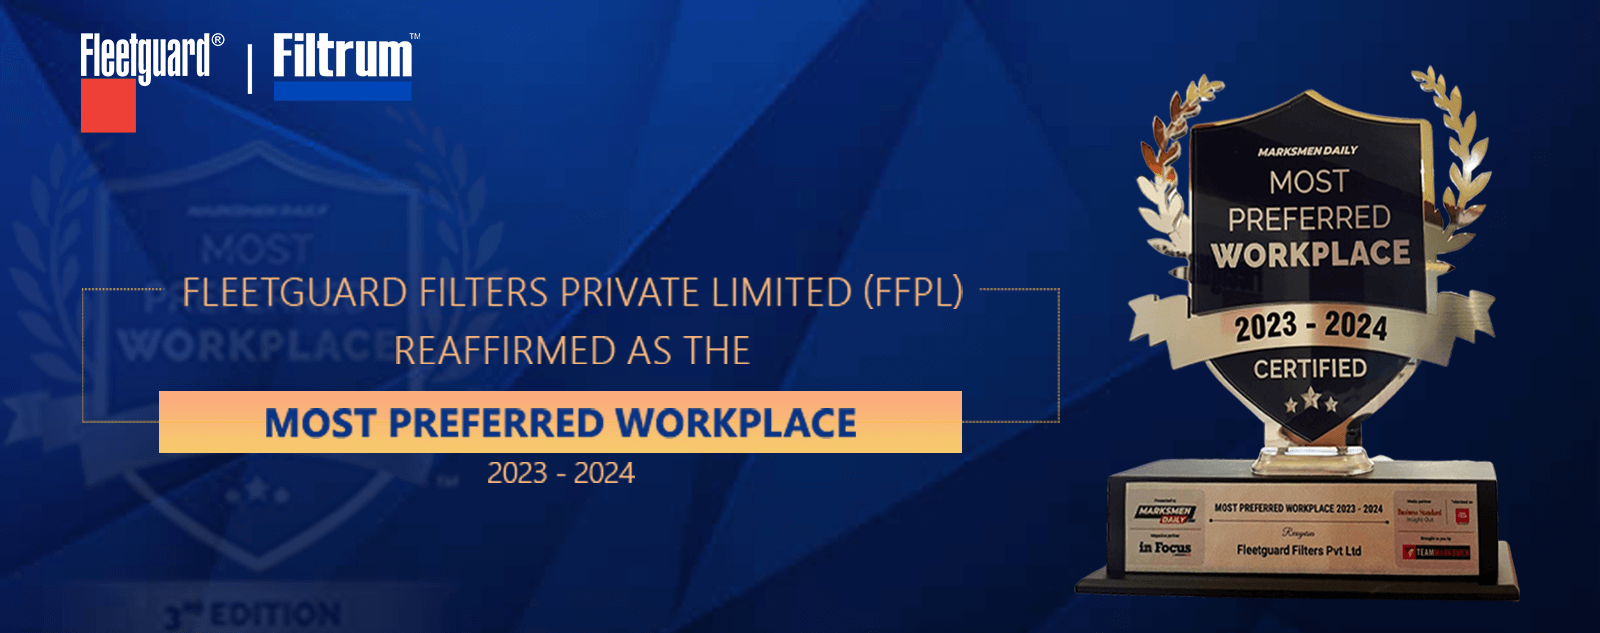 Fleetguard Filters (FFPL) Most preferred workplace award